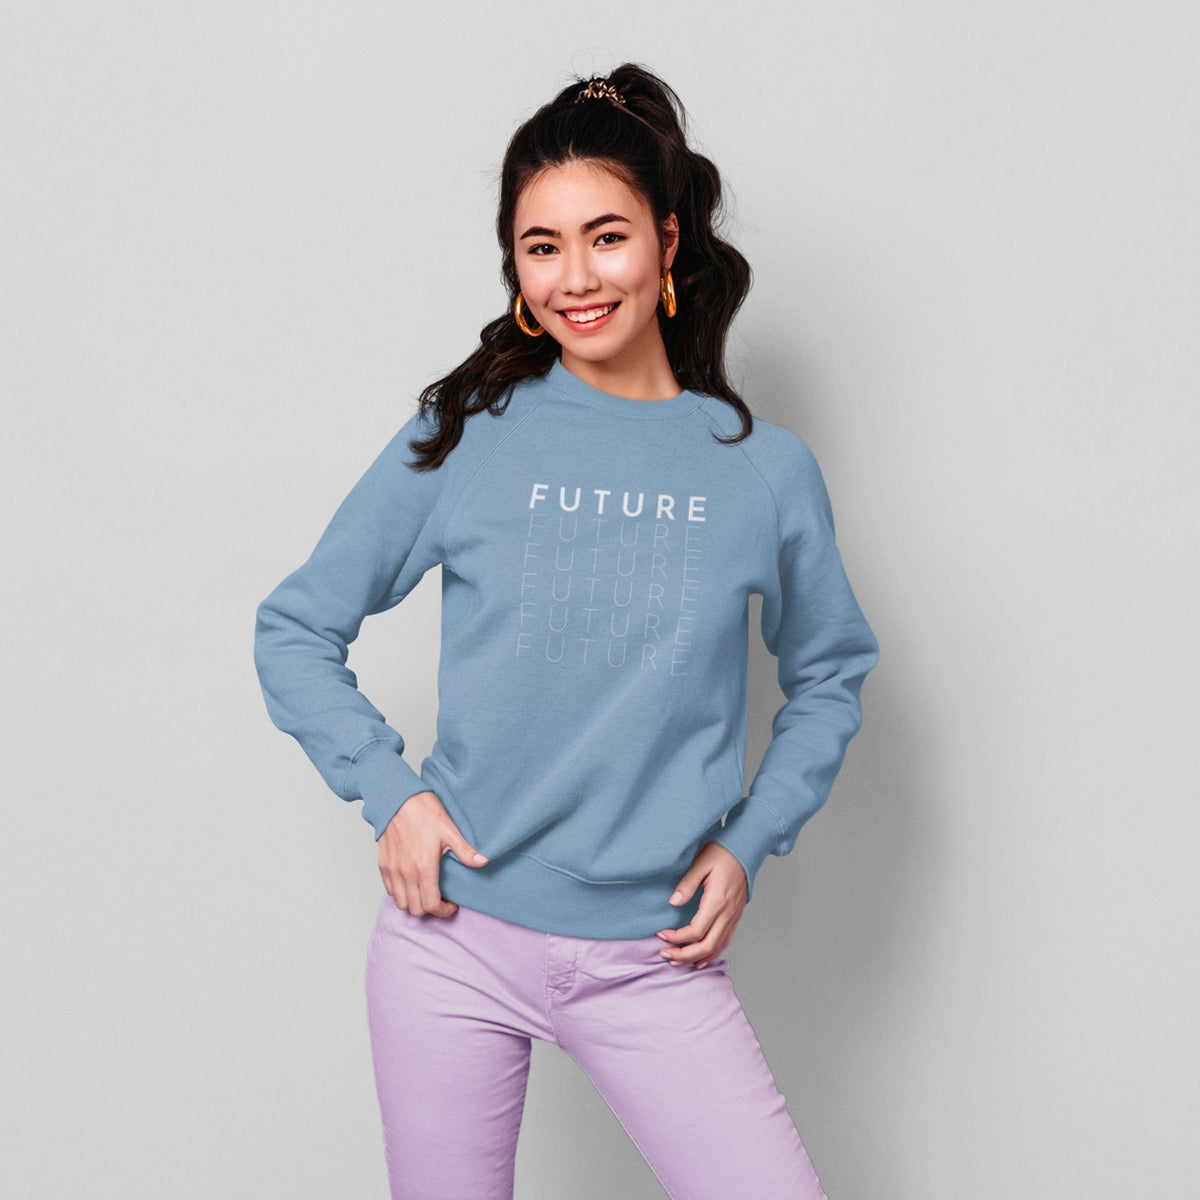 future-cotton-printed-unisex-light-blue-female-model-sweatshirt-gogirgit-com